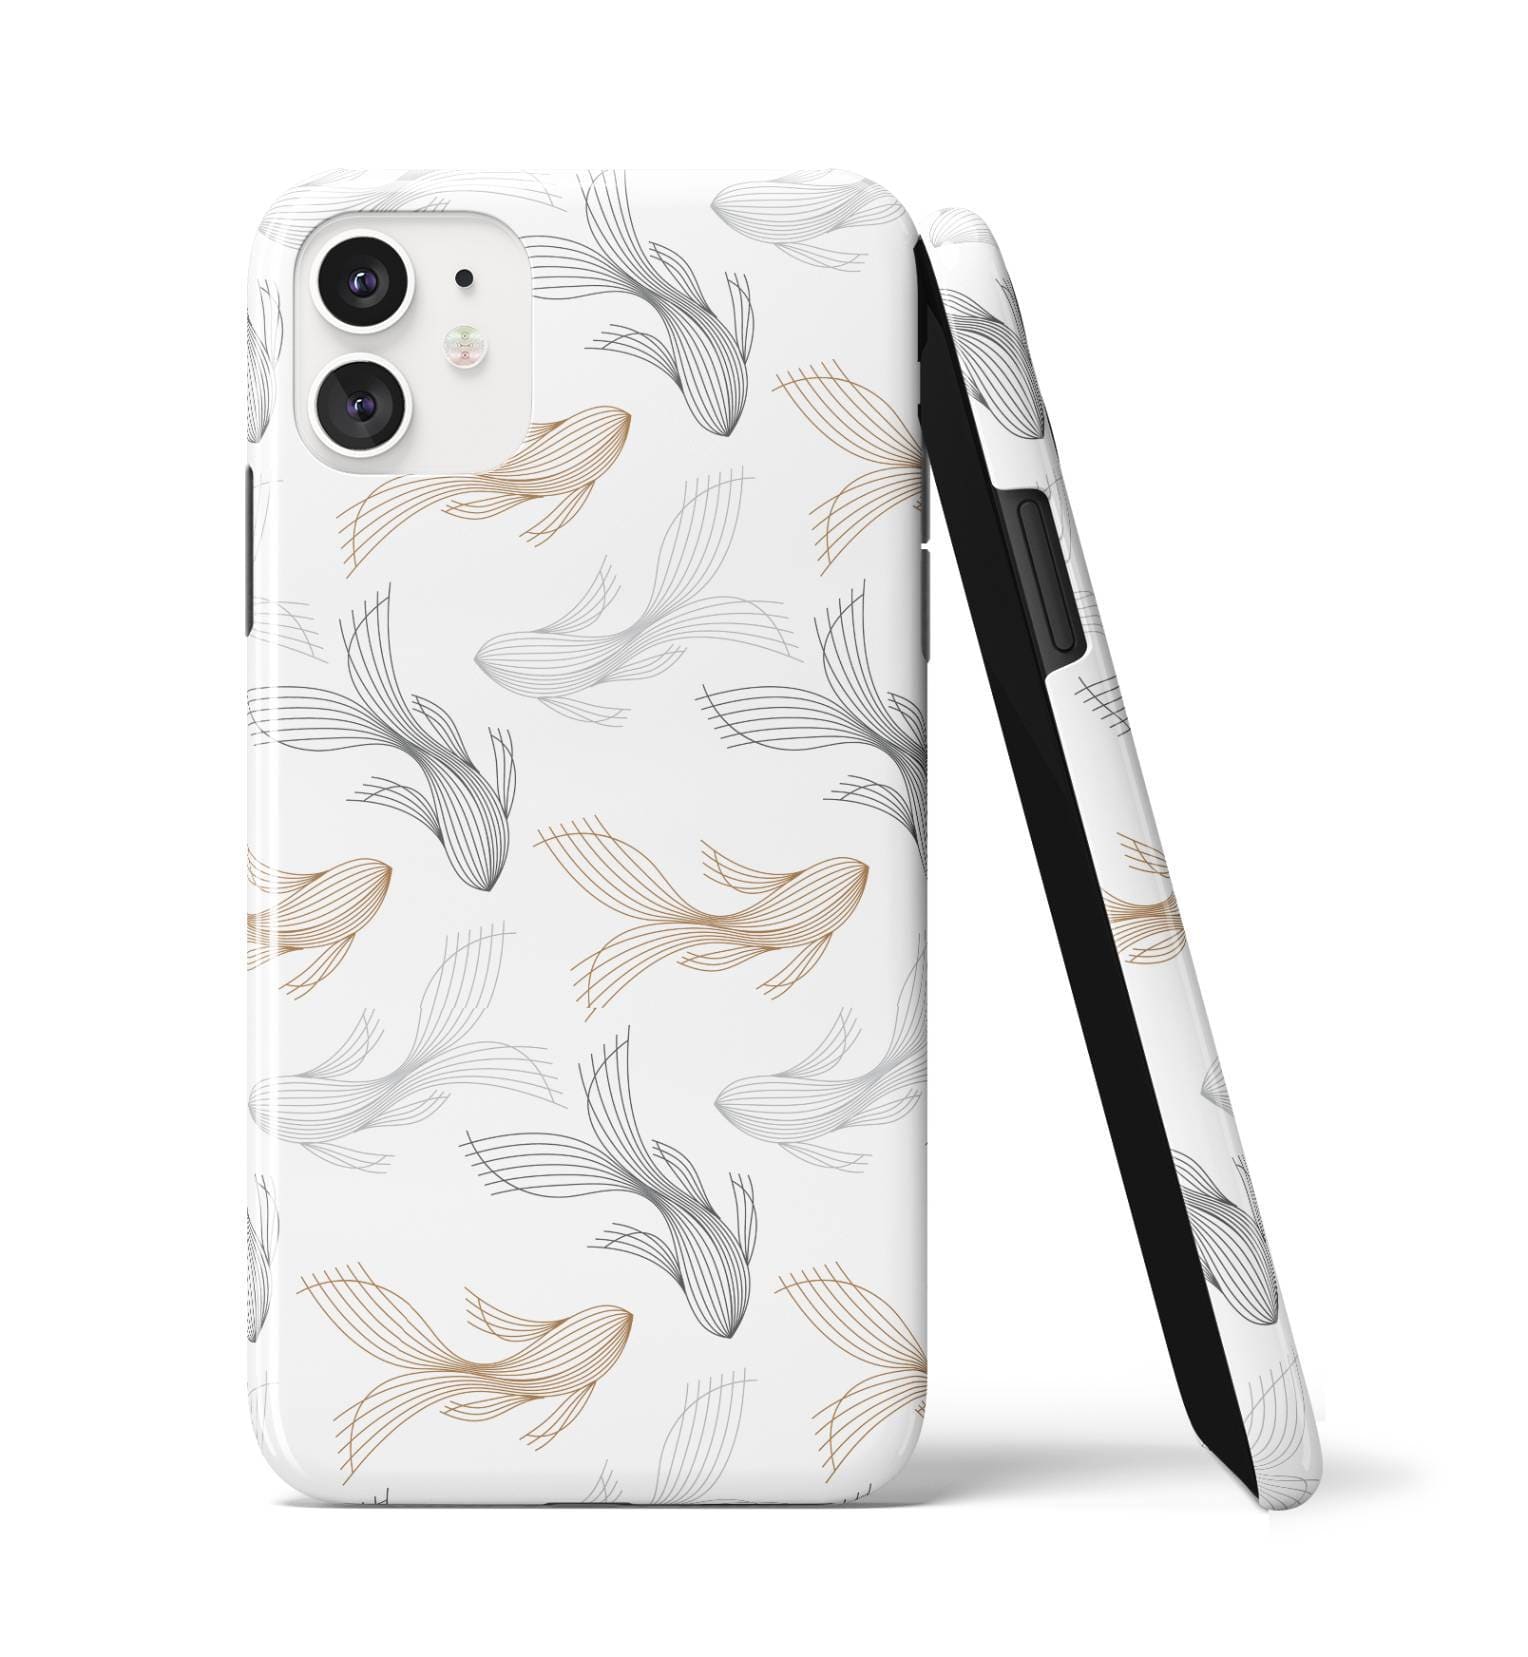 Fish Doodle - iPhone Case